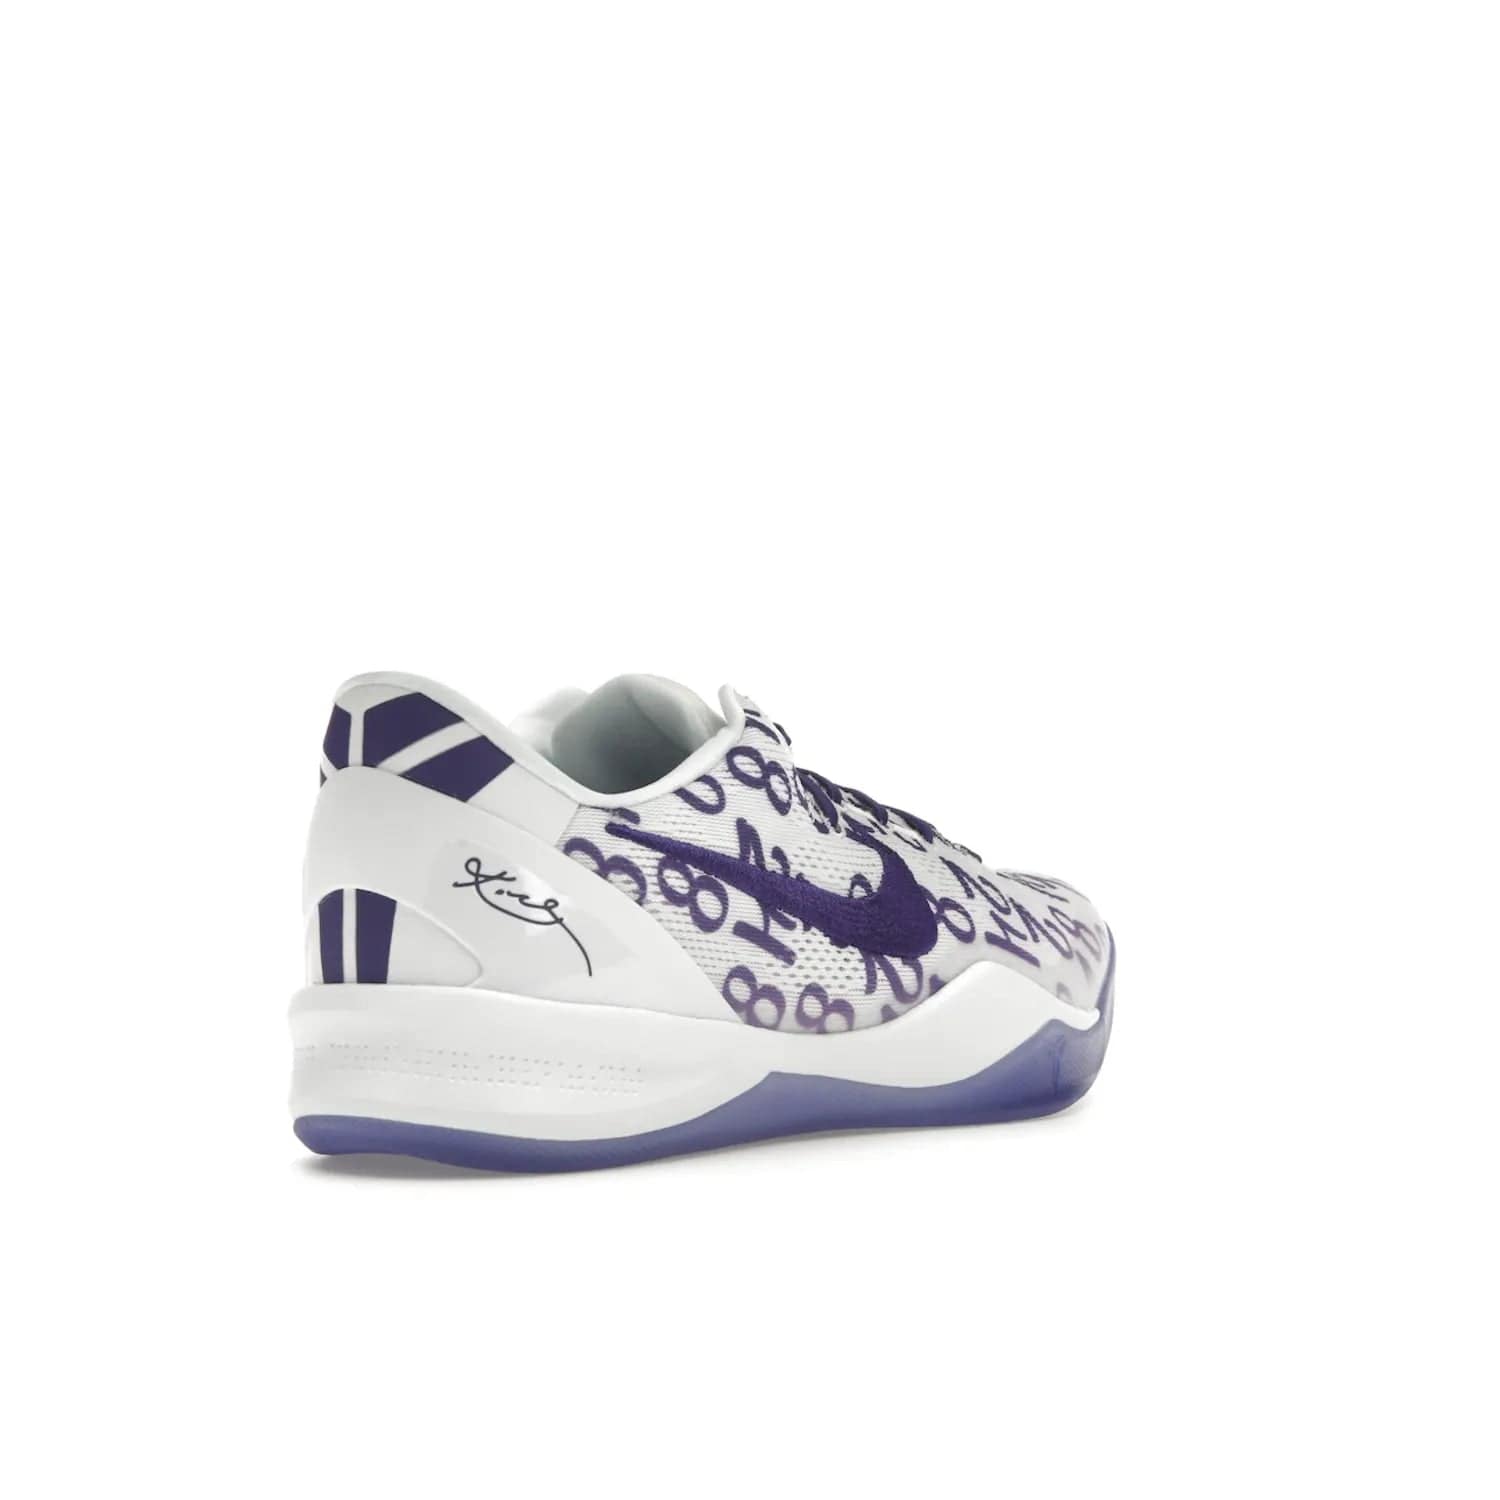 Nike Kobe 8 Protro Court Purple - Image 32 - Only at www.BallersClubKickz.com - 